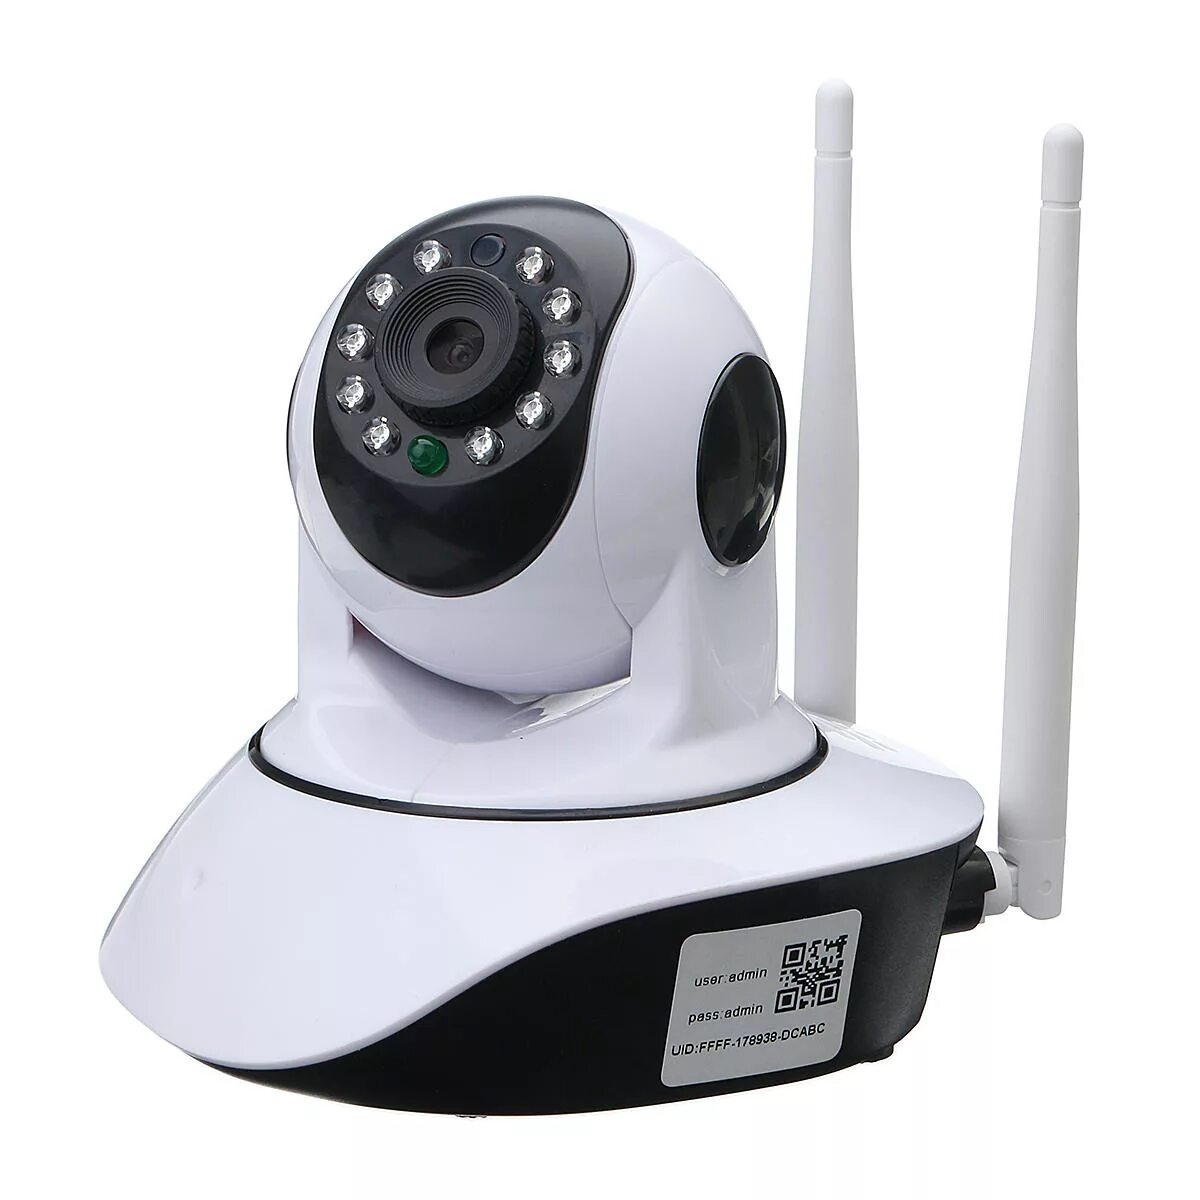 Wifi cam. WIFI камера Wireless Network Camera. IP Camera 720p камера. IP Camera WIFI cam 9. Беспроводная Wi-Fi IP камера t0812.